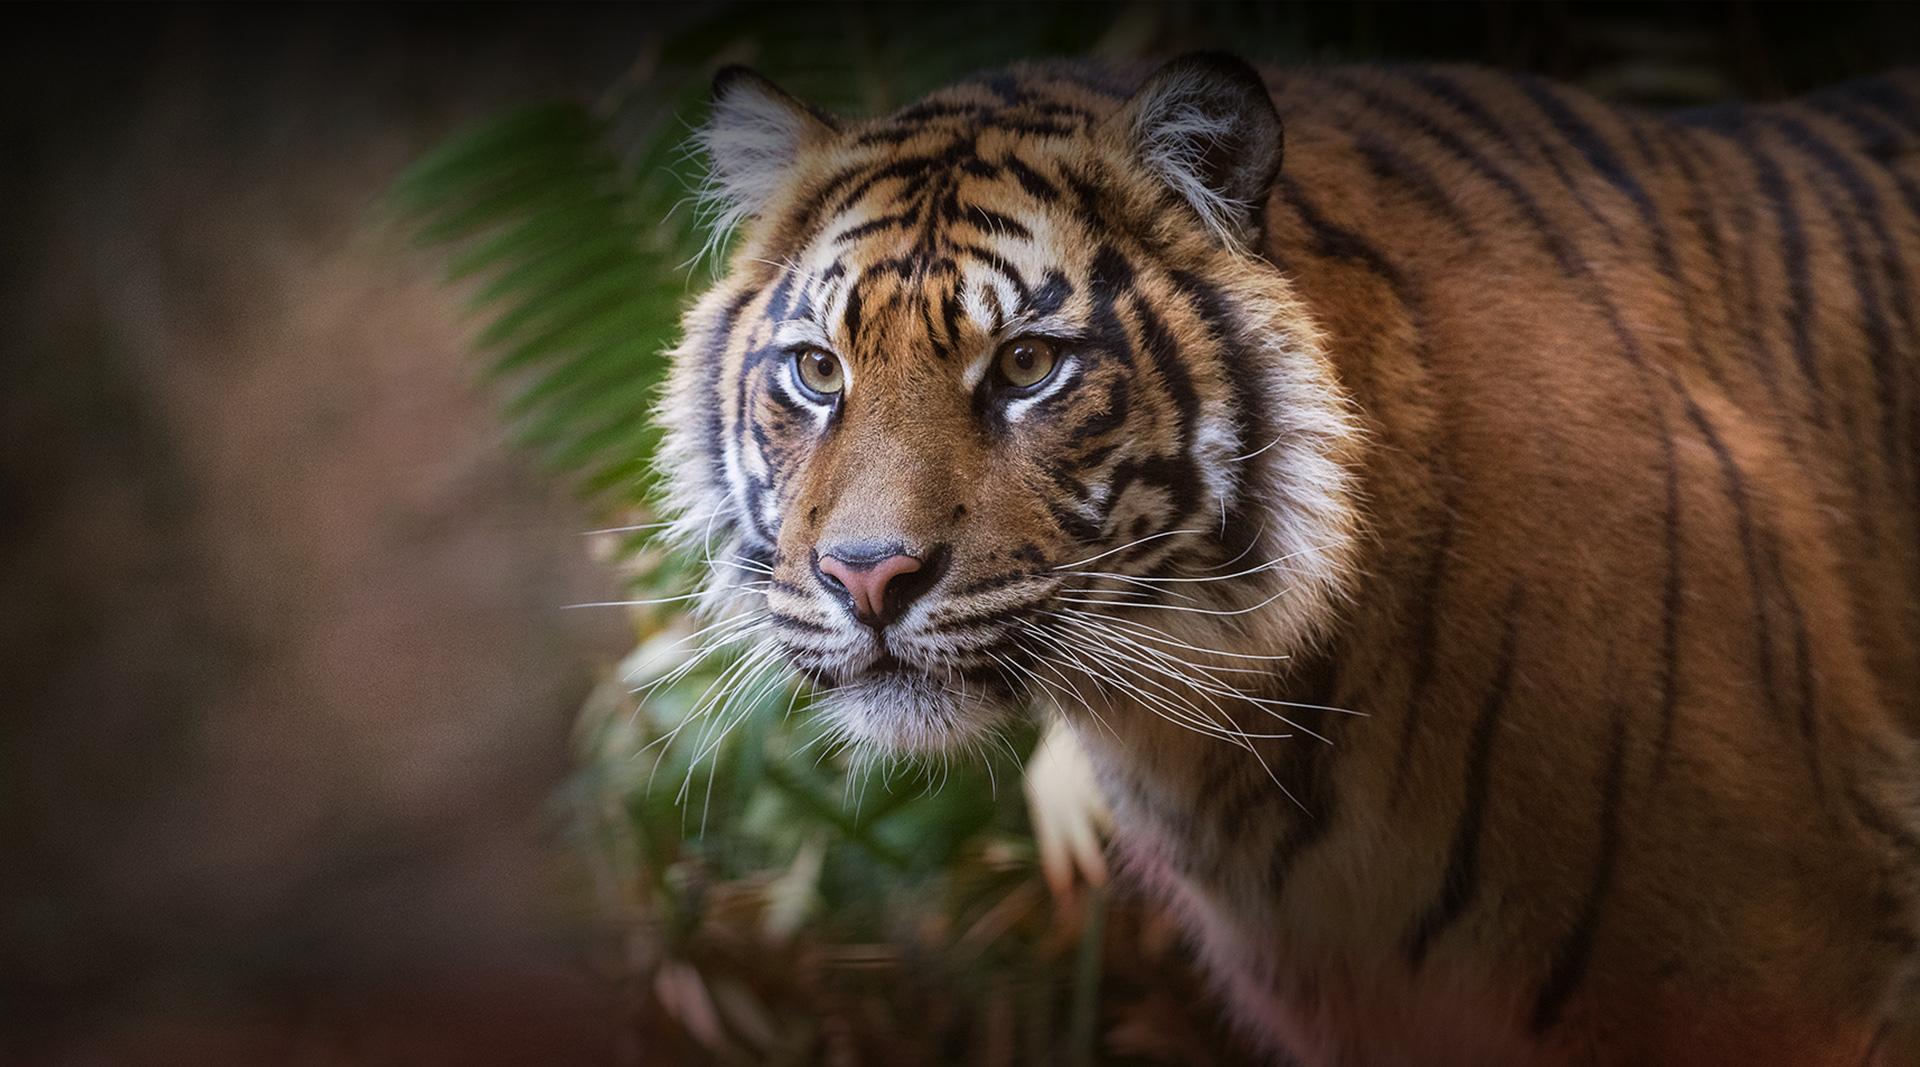 Tiger looking